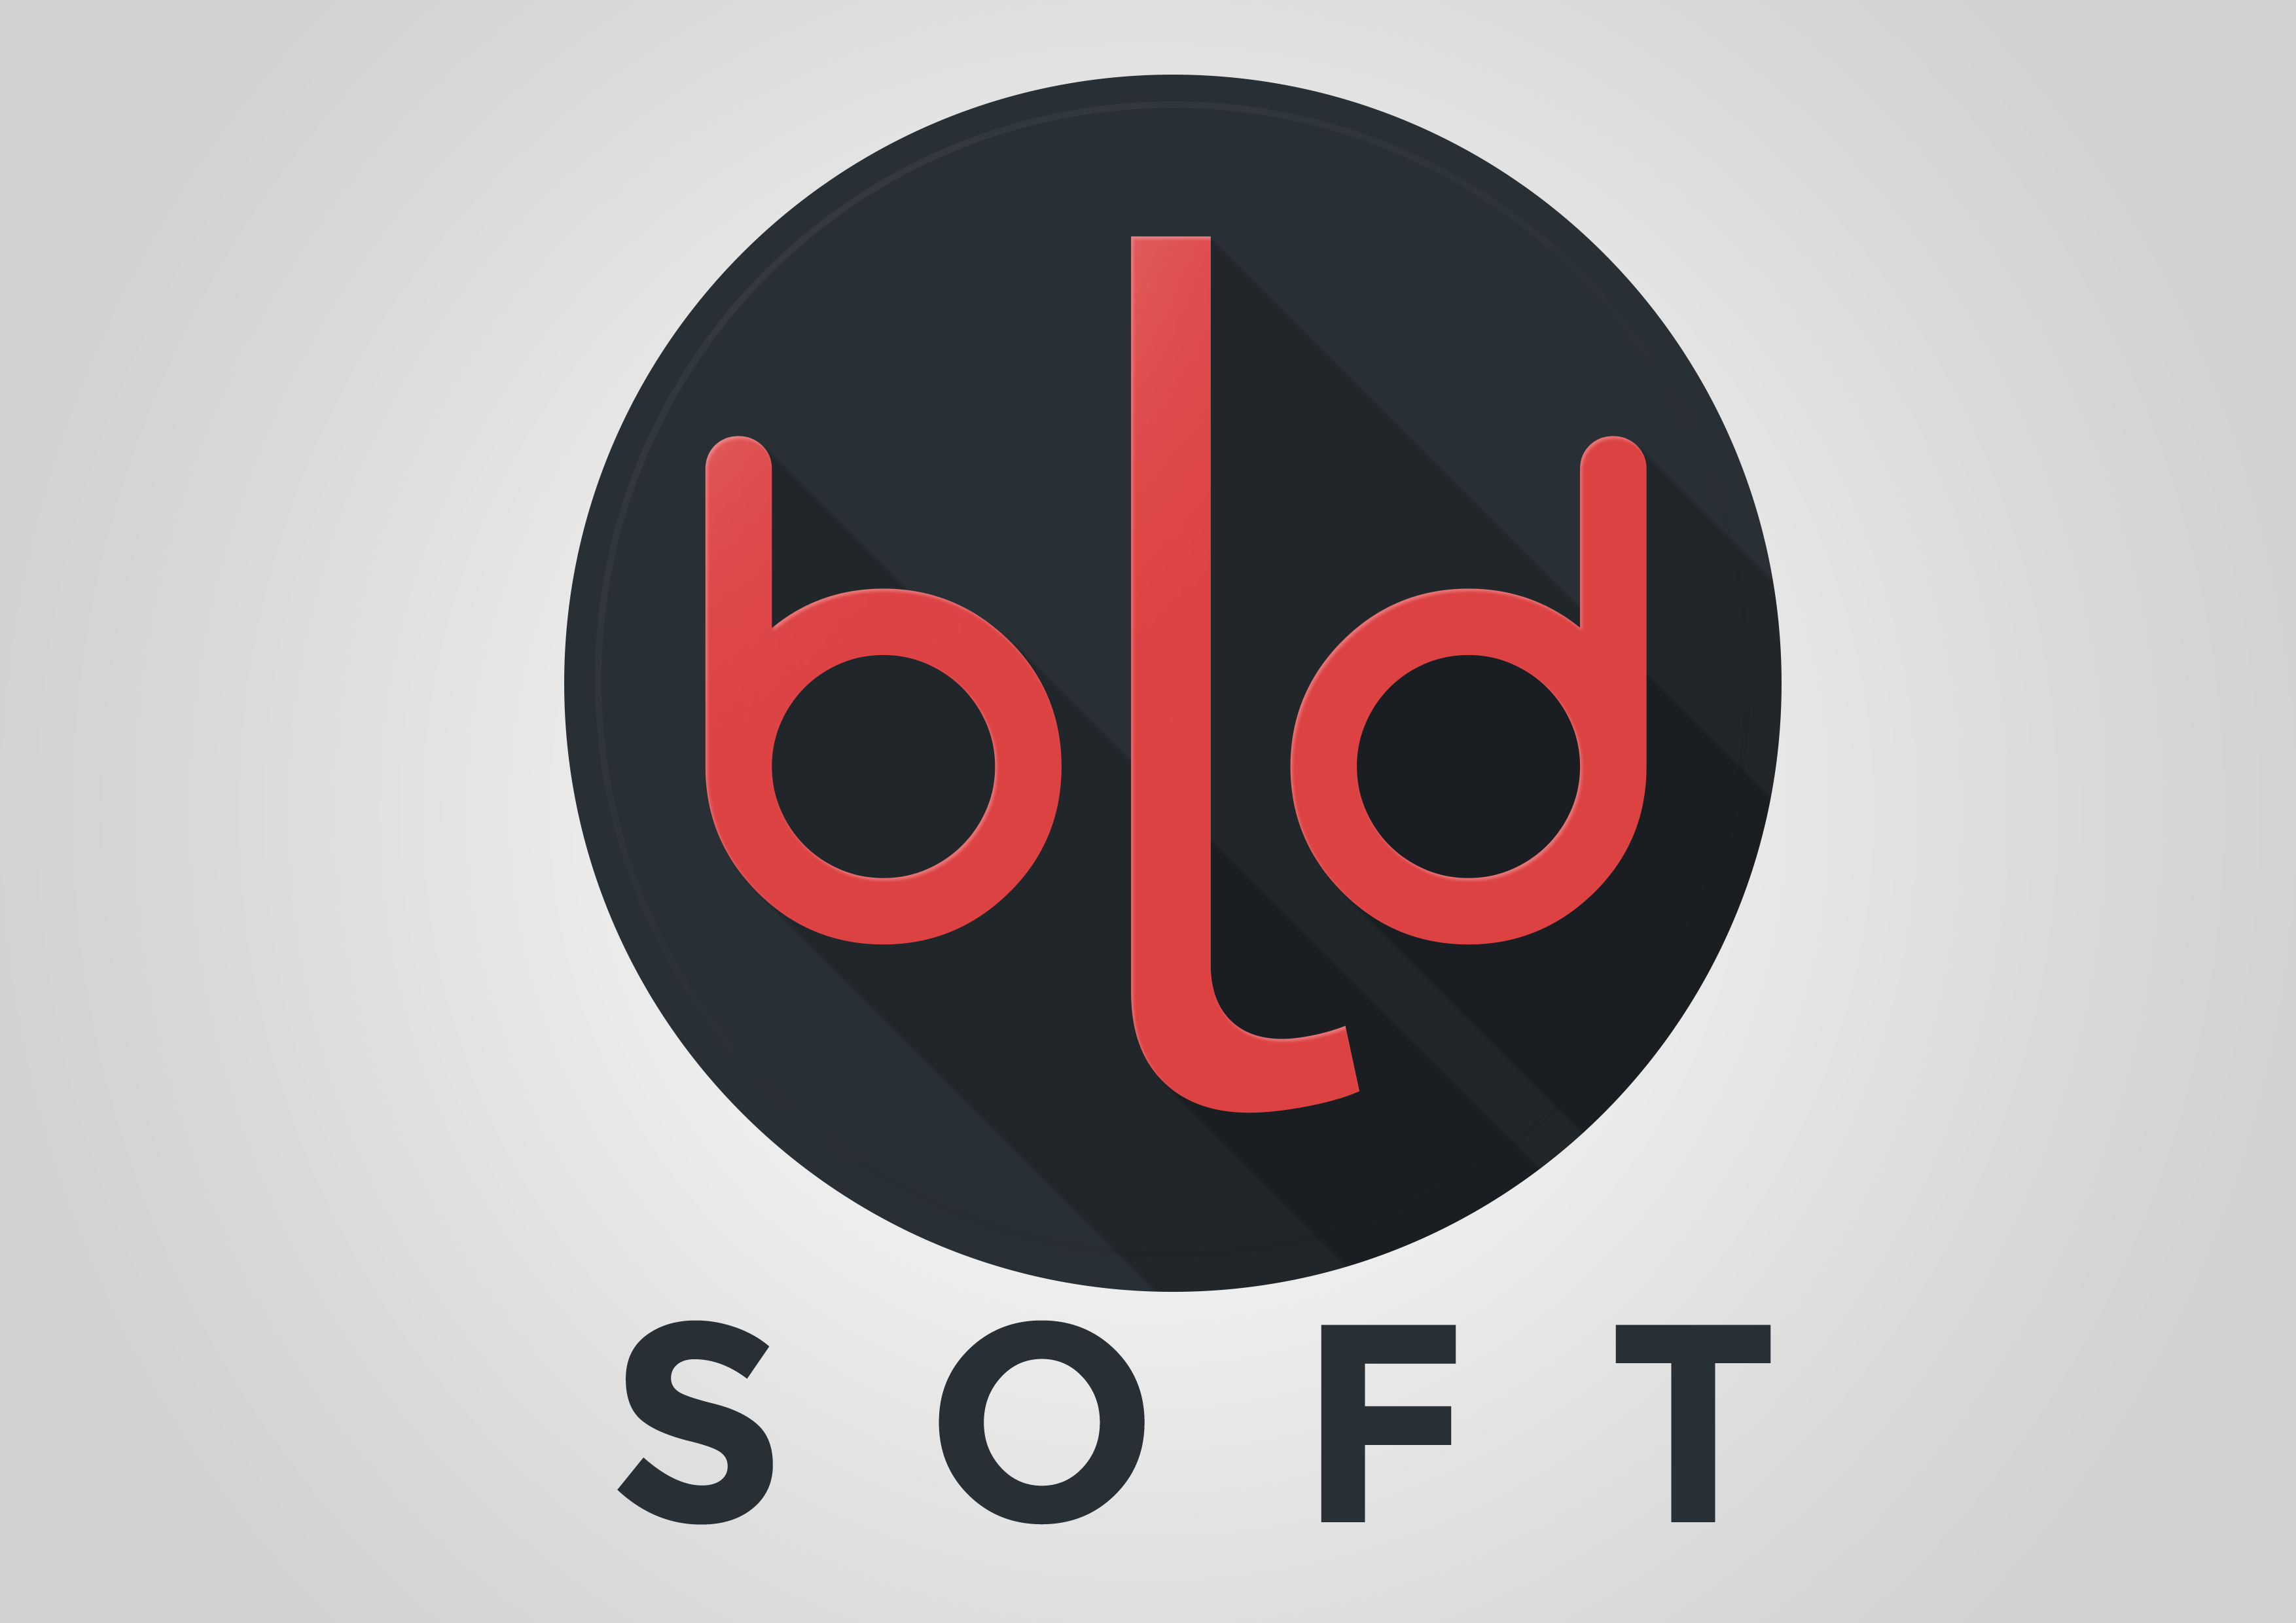 Логотип компании «BLD Soft»